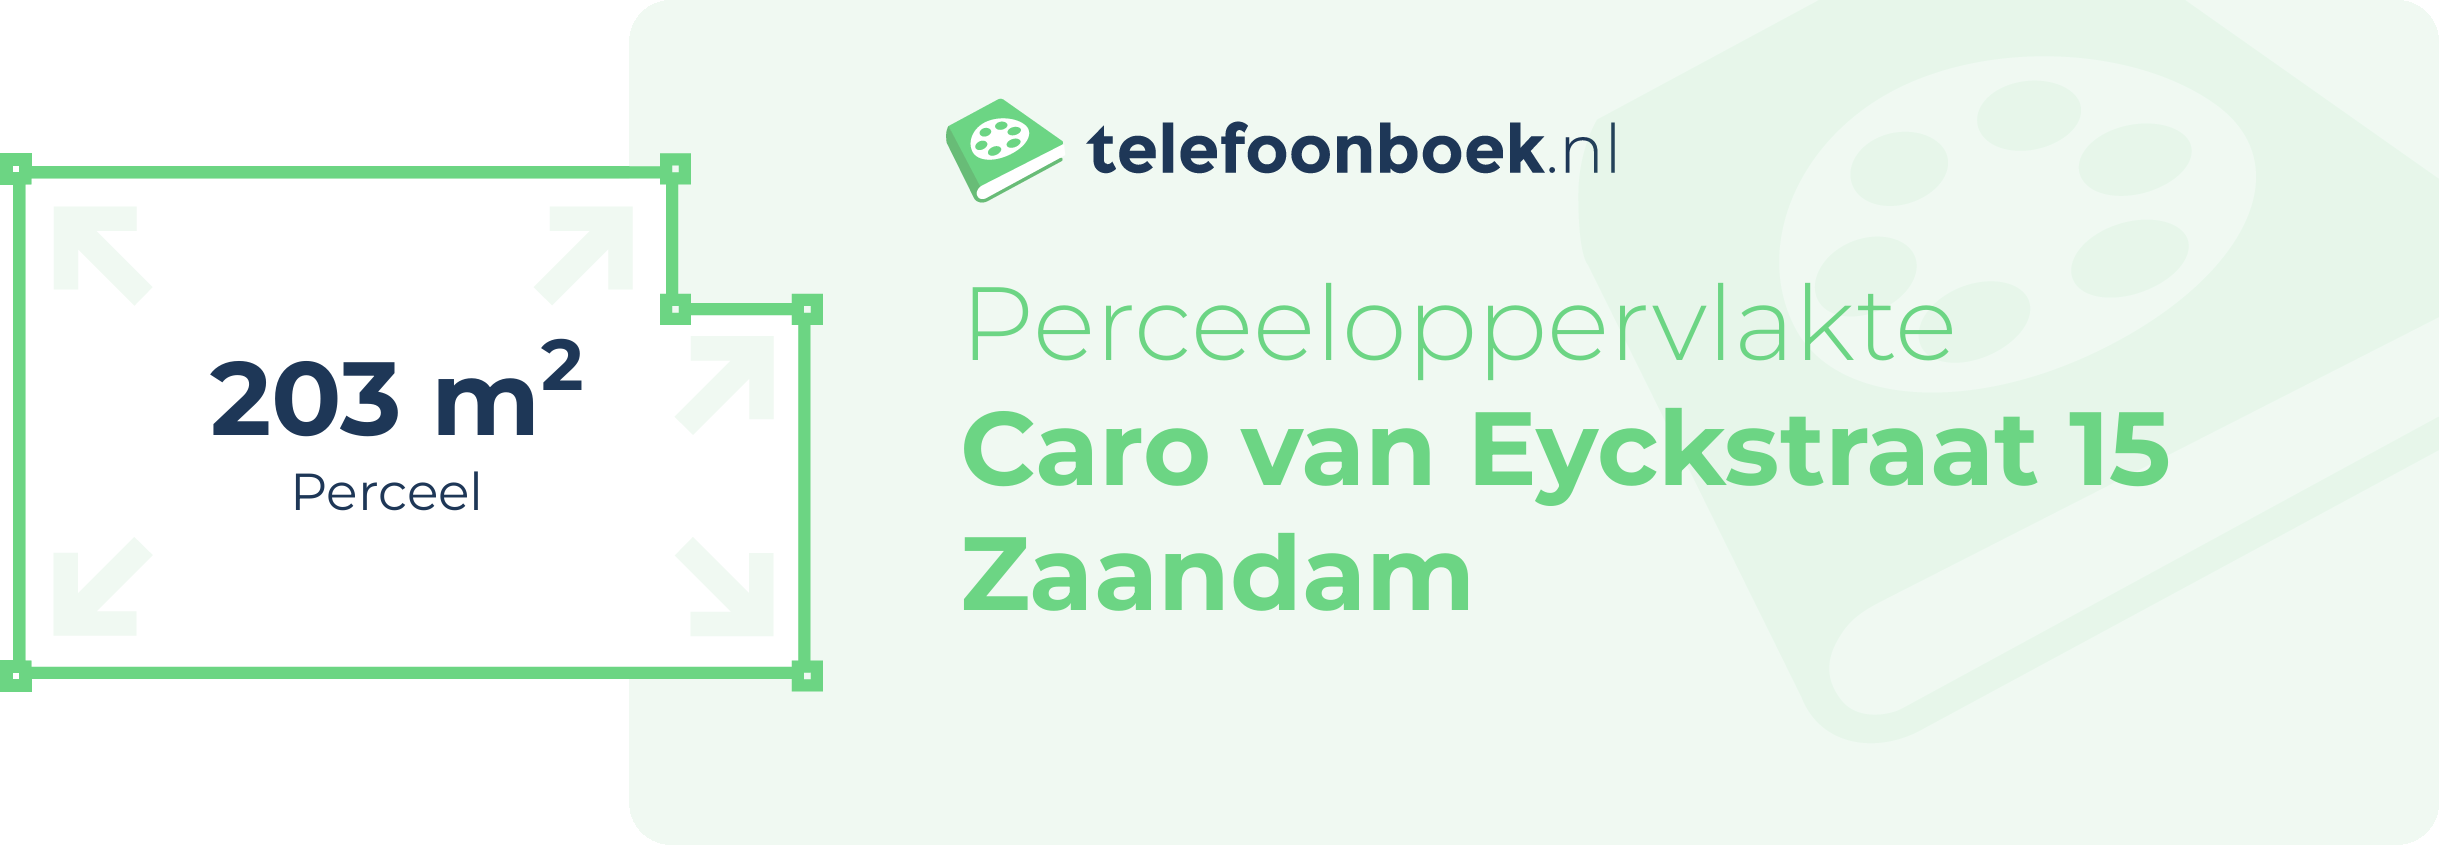 Perceeloppervlakte Caro Van Eyckstraat 15 Zaandam